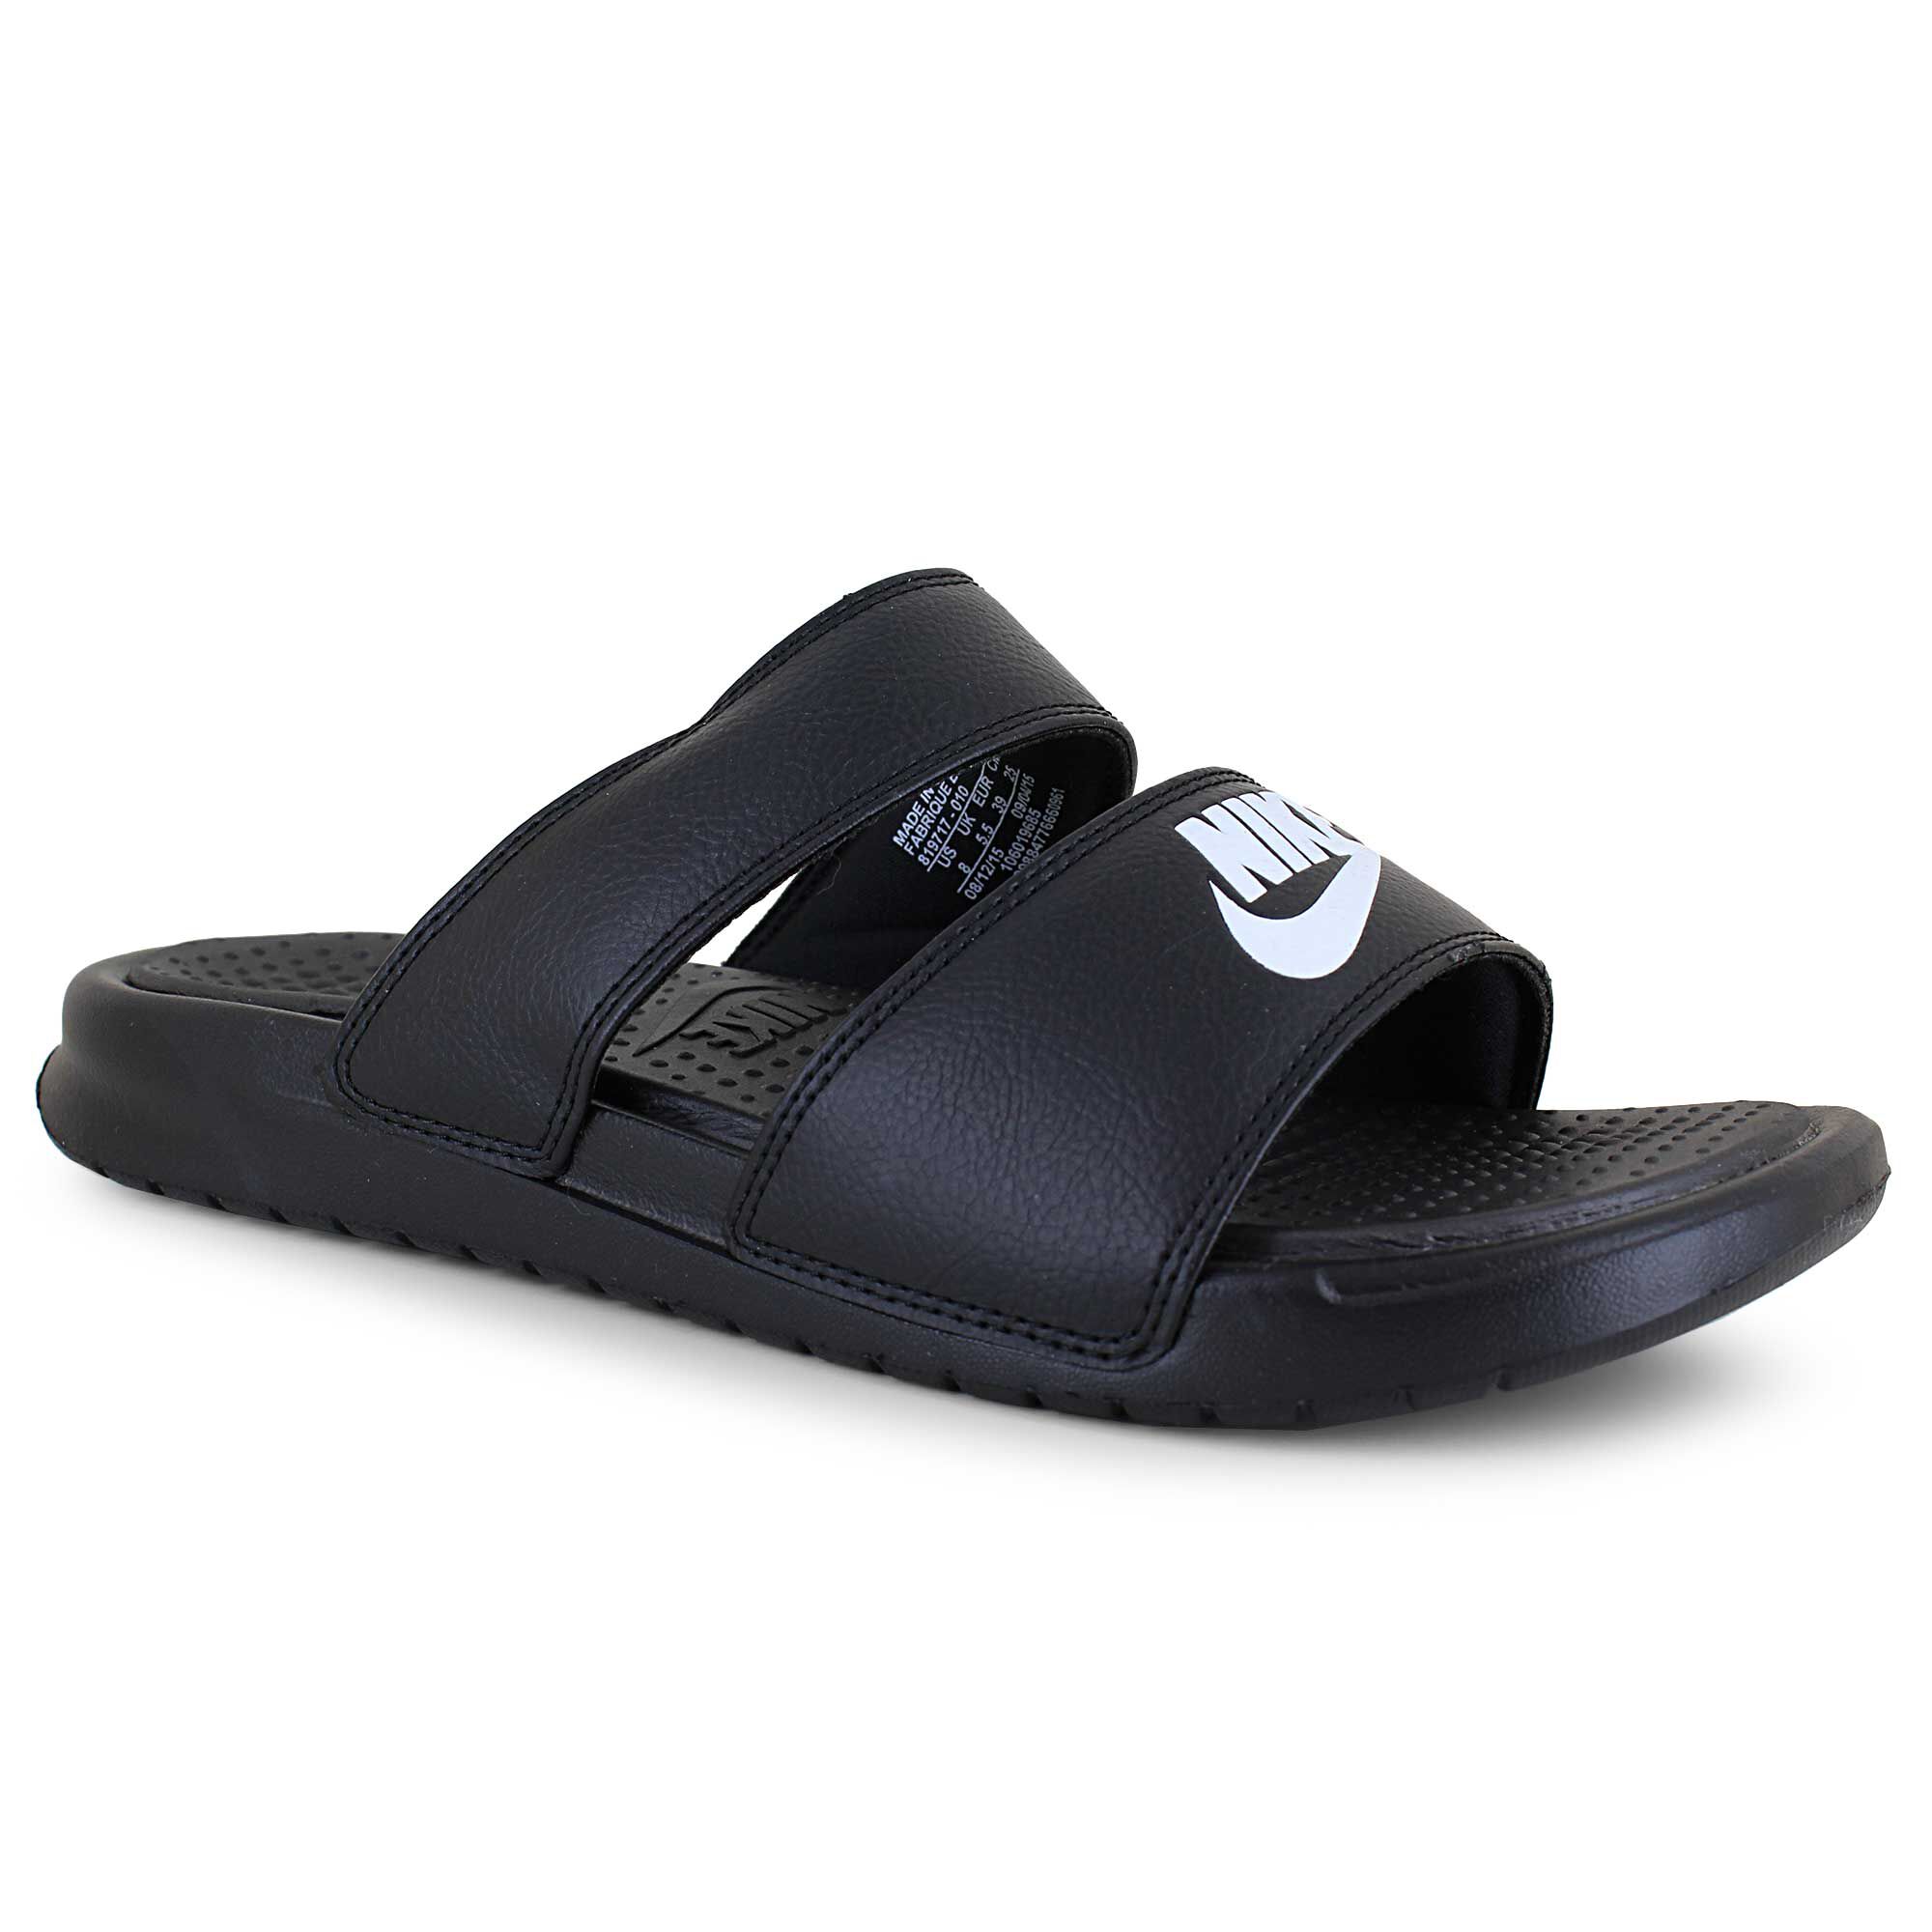 Sandals/Slides | Shop Now at SHOE SHOW MEGA